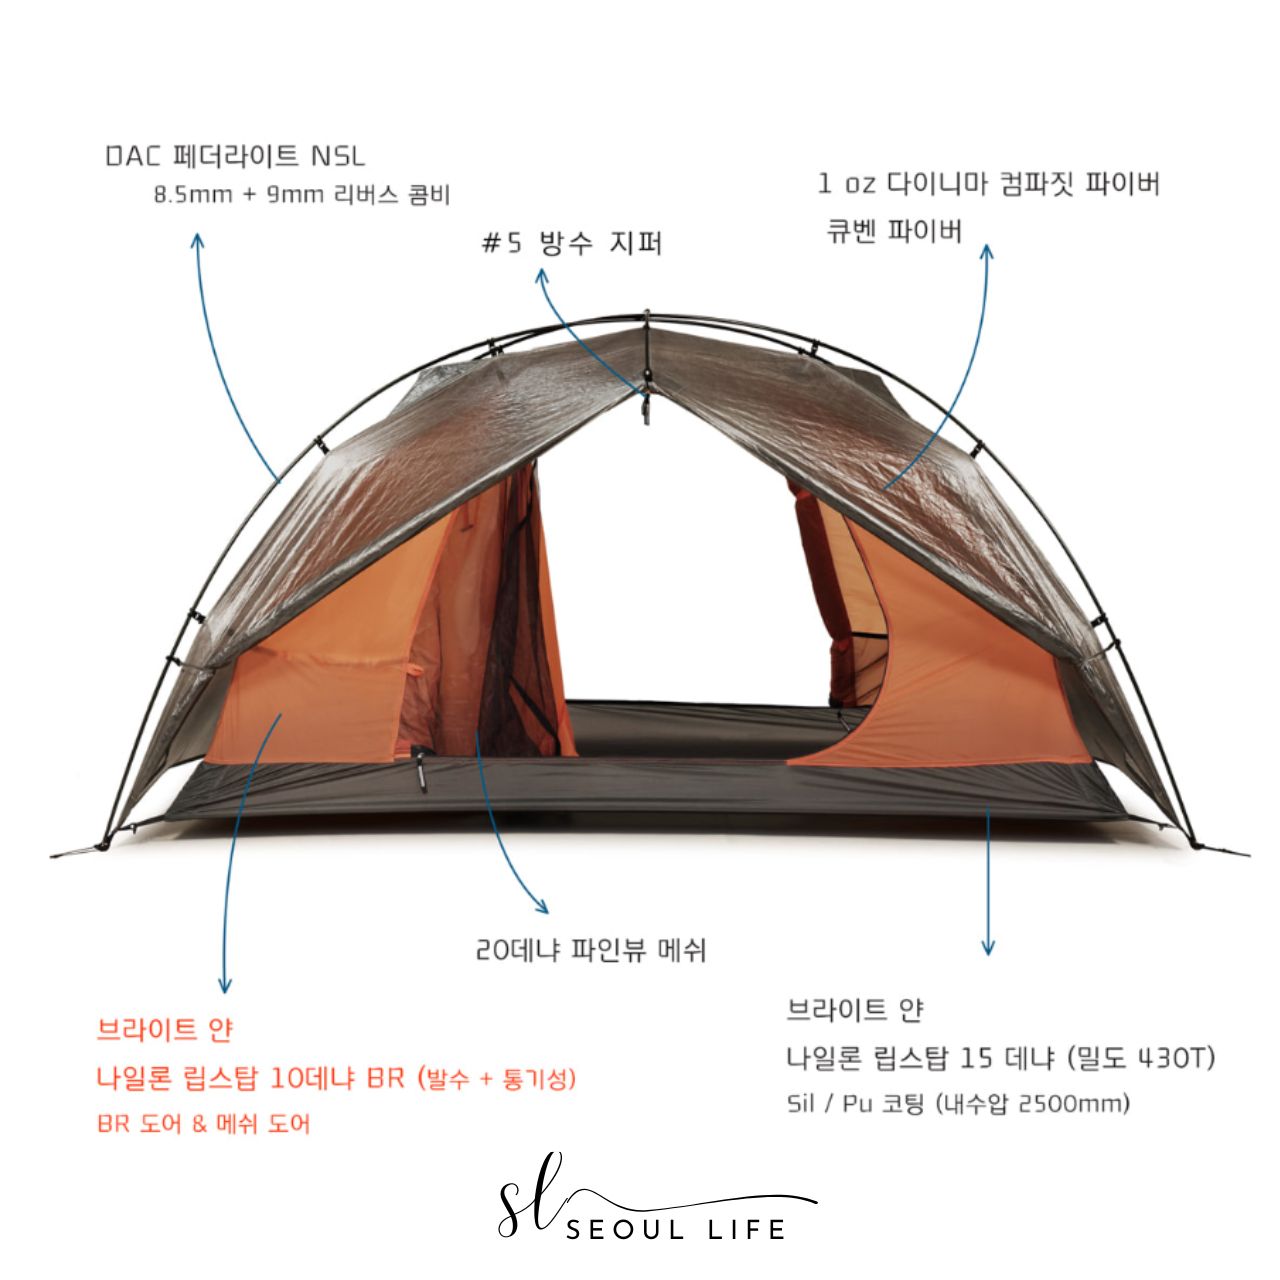 *Backcountry* Xanadu 1.5 Cuben, hiking/camping tent, super light